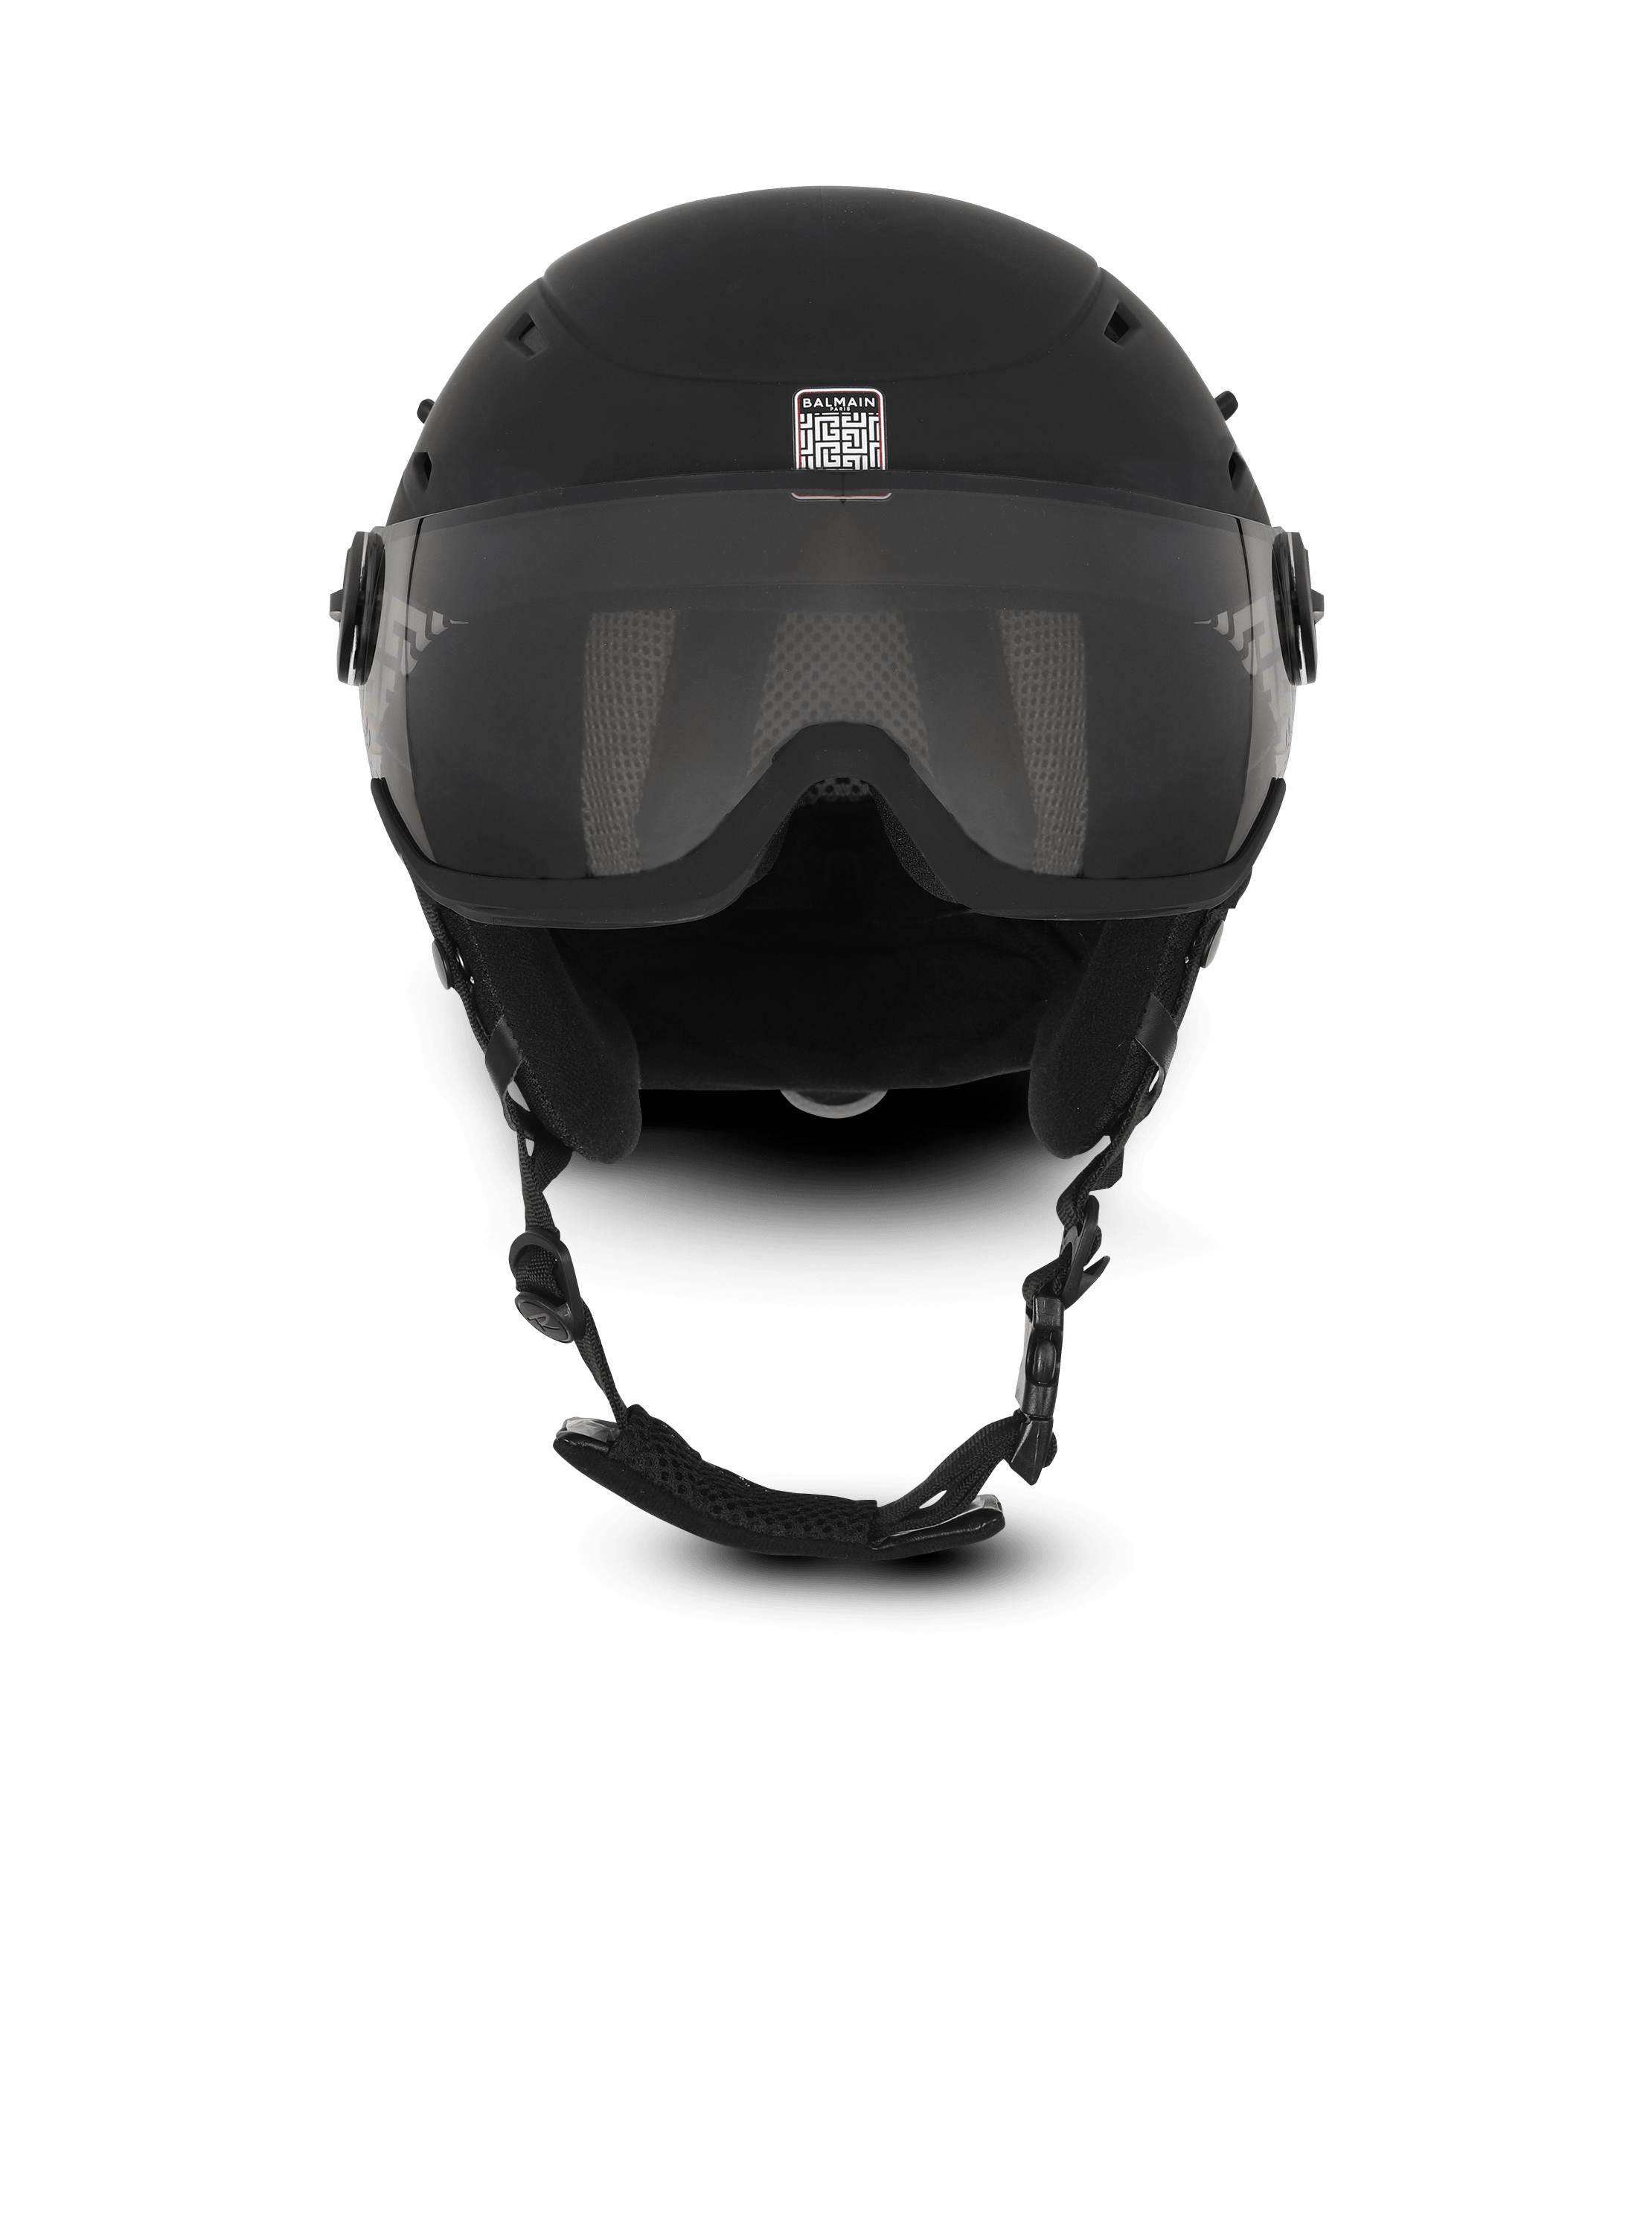 Balmain x Rossignol - Rossignol ski helmet with Balmain monogram in ivory and black